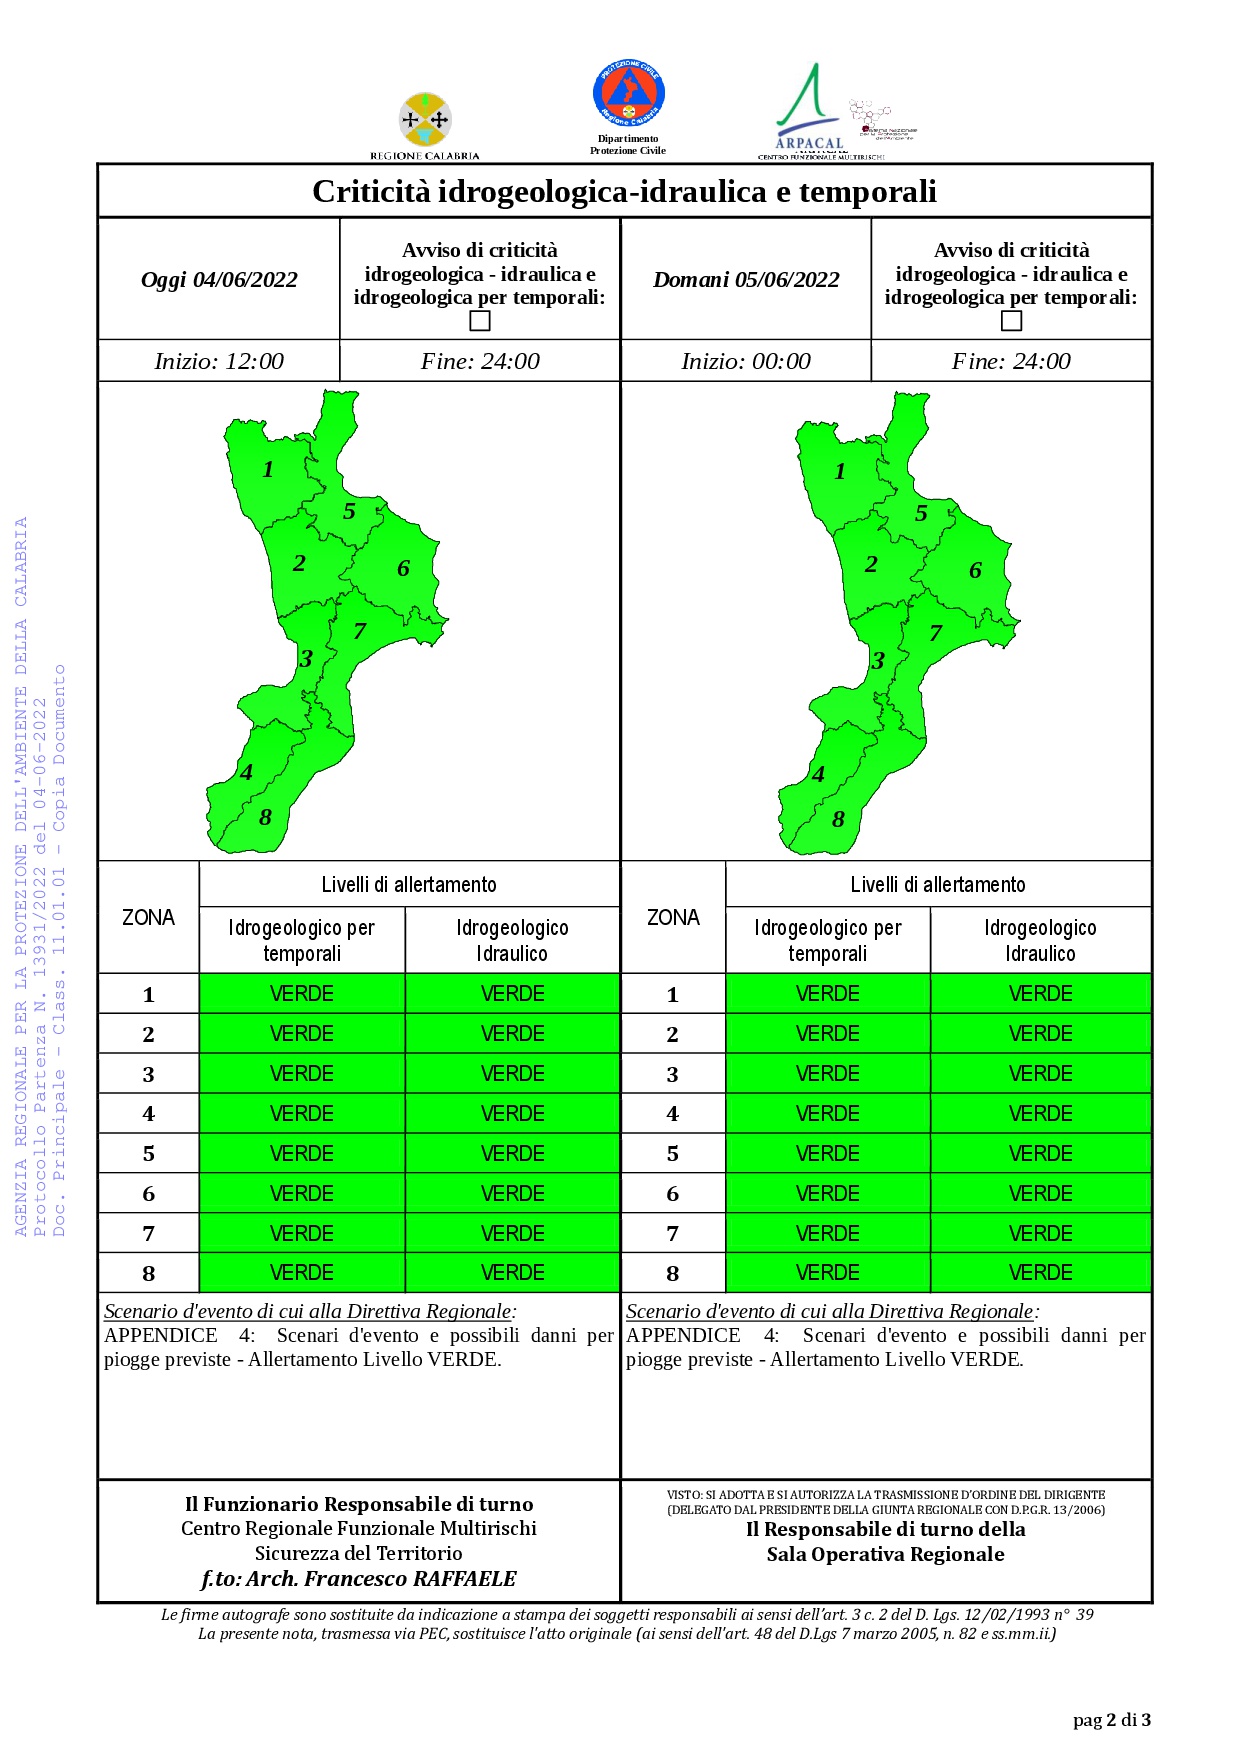 Criticità idrogeologica-idraulica e temporali in Calabria 04-06-2022